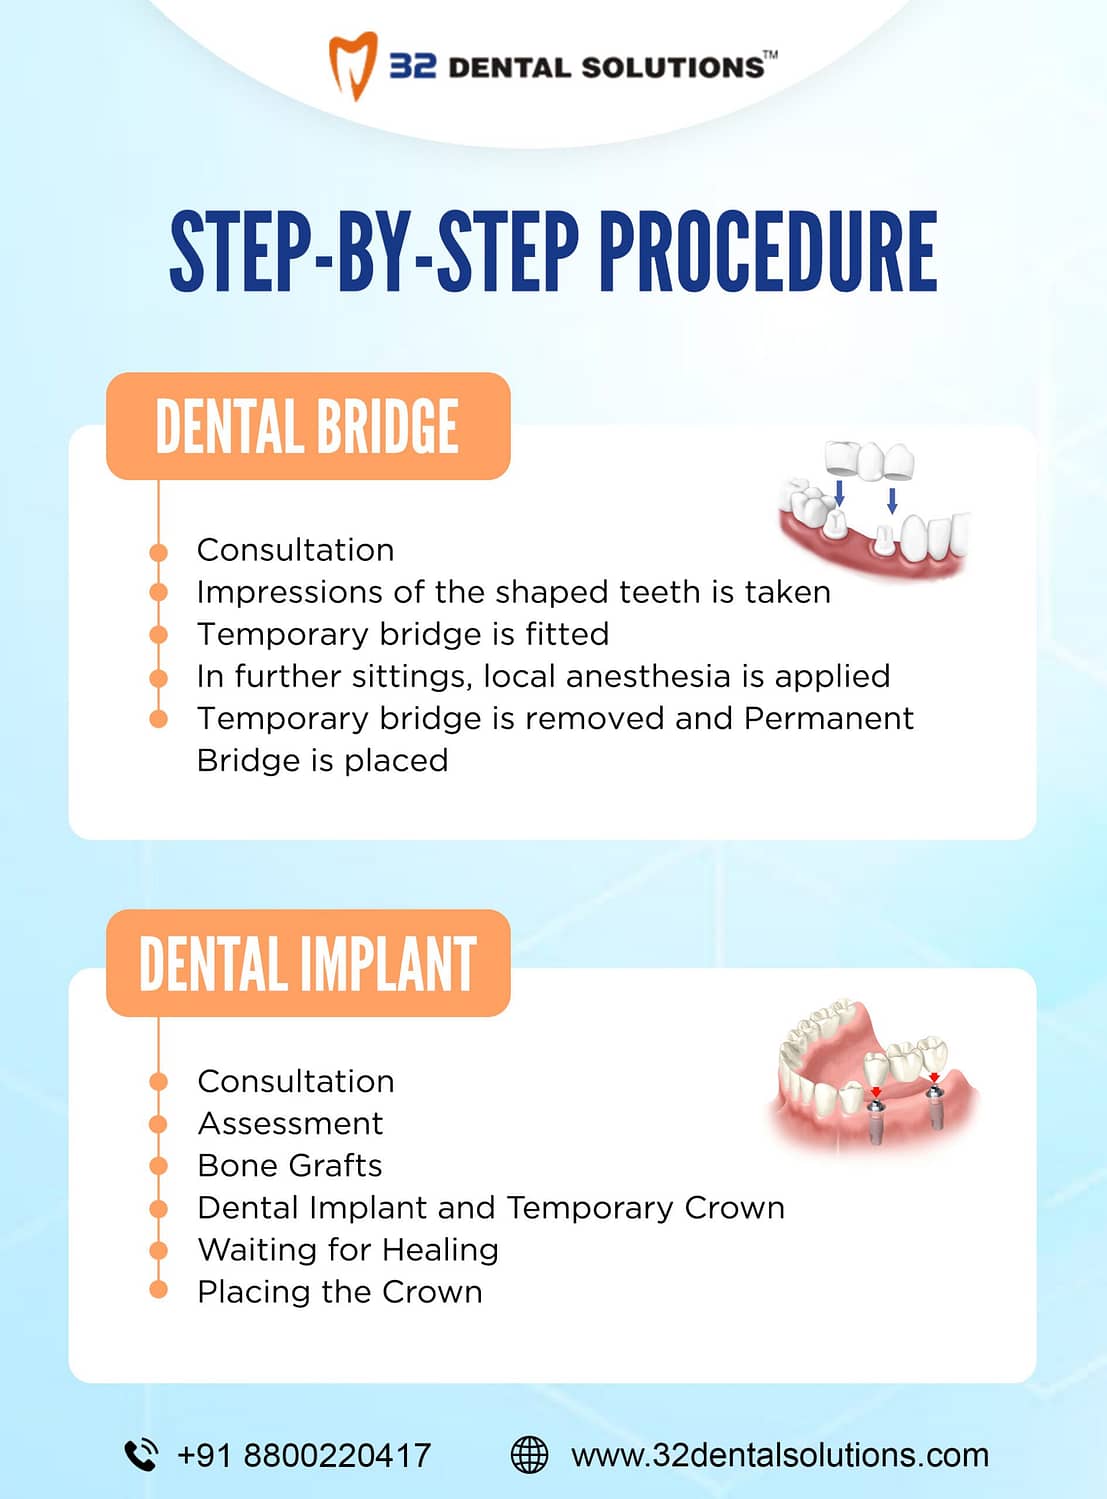 Procedure for Dental Bridge and Dental Implant